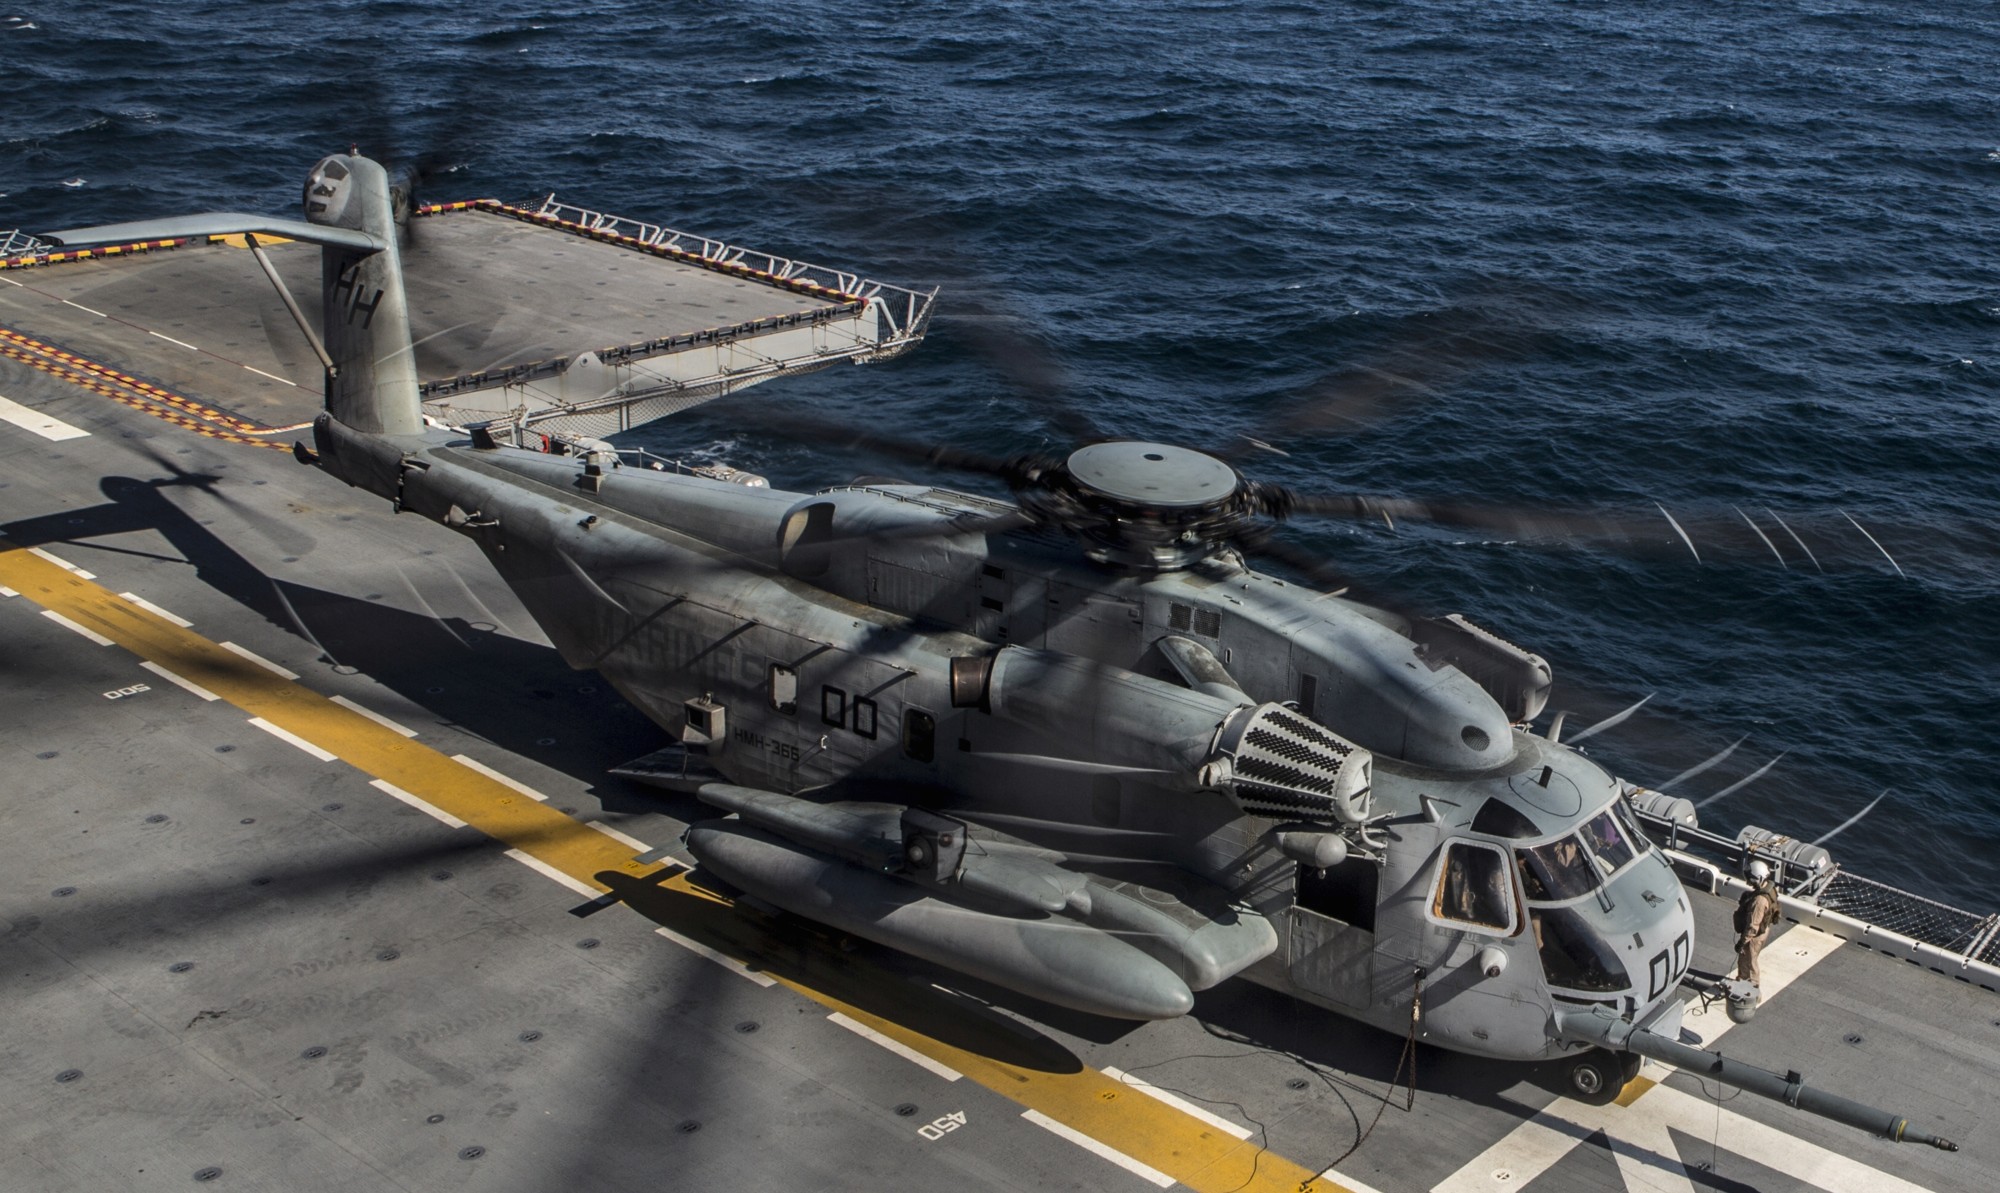 hmh-366 hammerheads marine heavy helicopter squadron usmc sikorsky ch-53e super stallion 36 uss kearsarge lhd-3